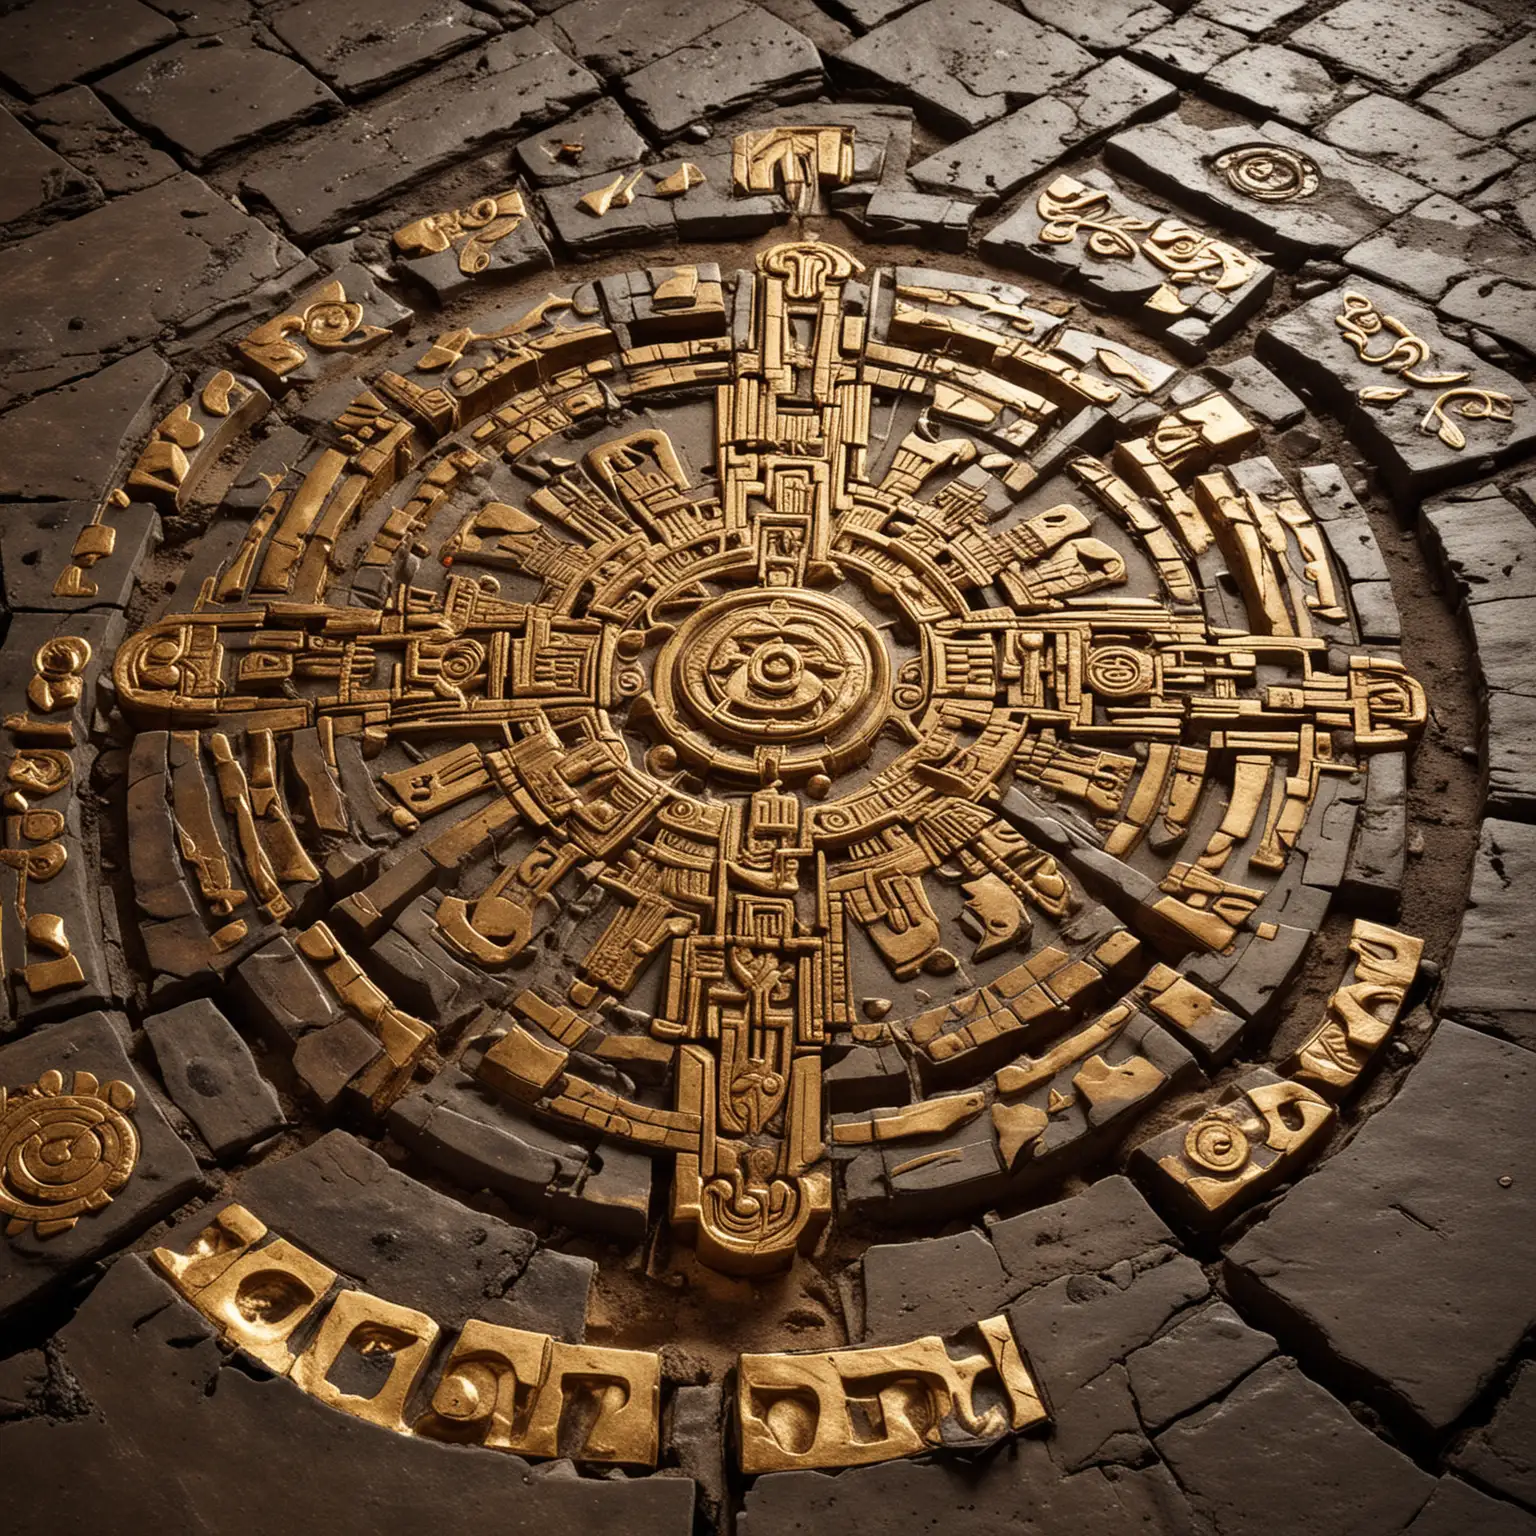 molton gold liquid metal pouring into floor aztec symbols through cracks
